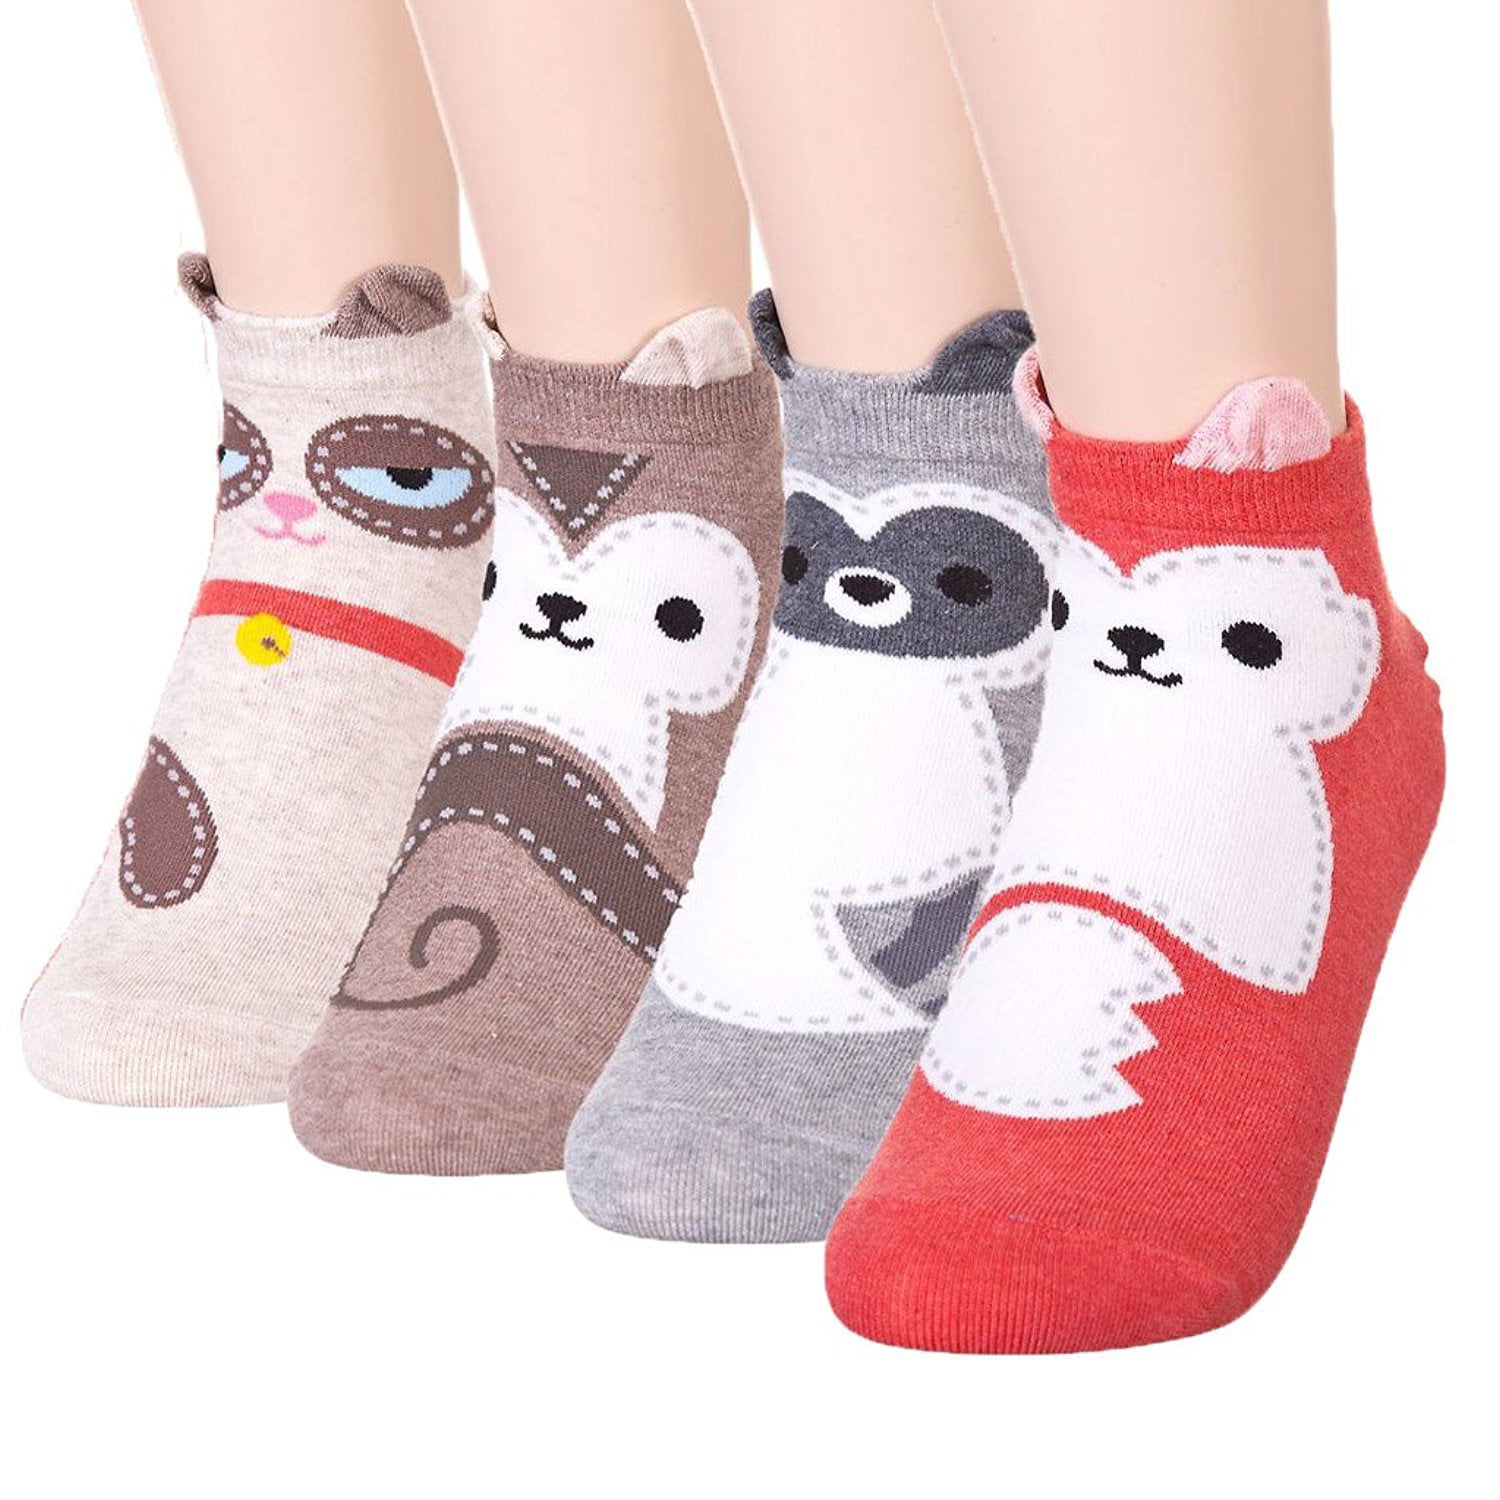 Clothing Socks - Women's Cute Animals Animation Character Socks for ...